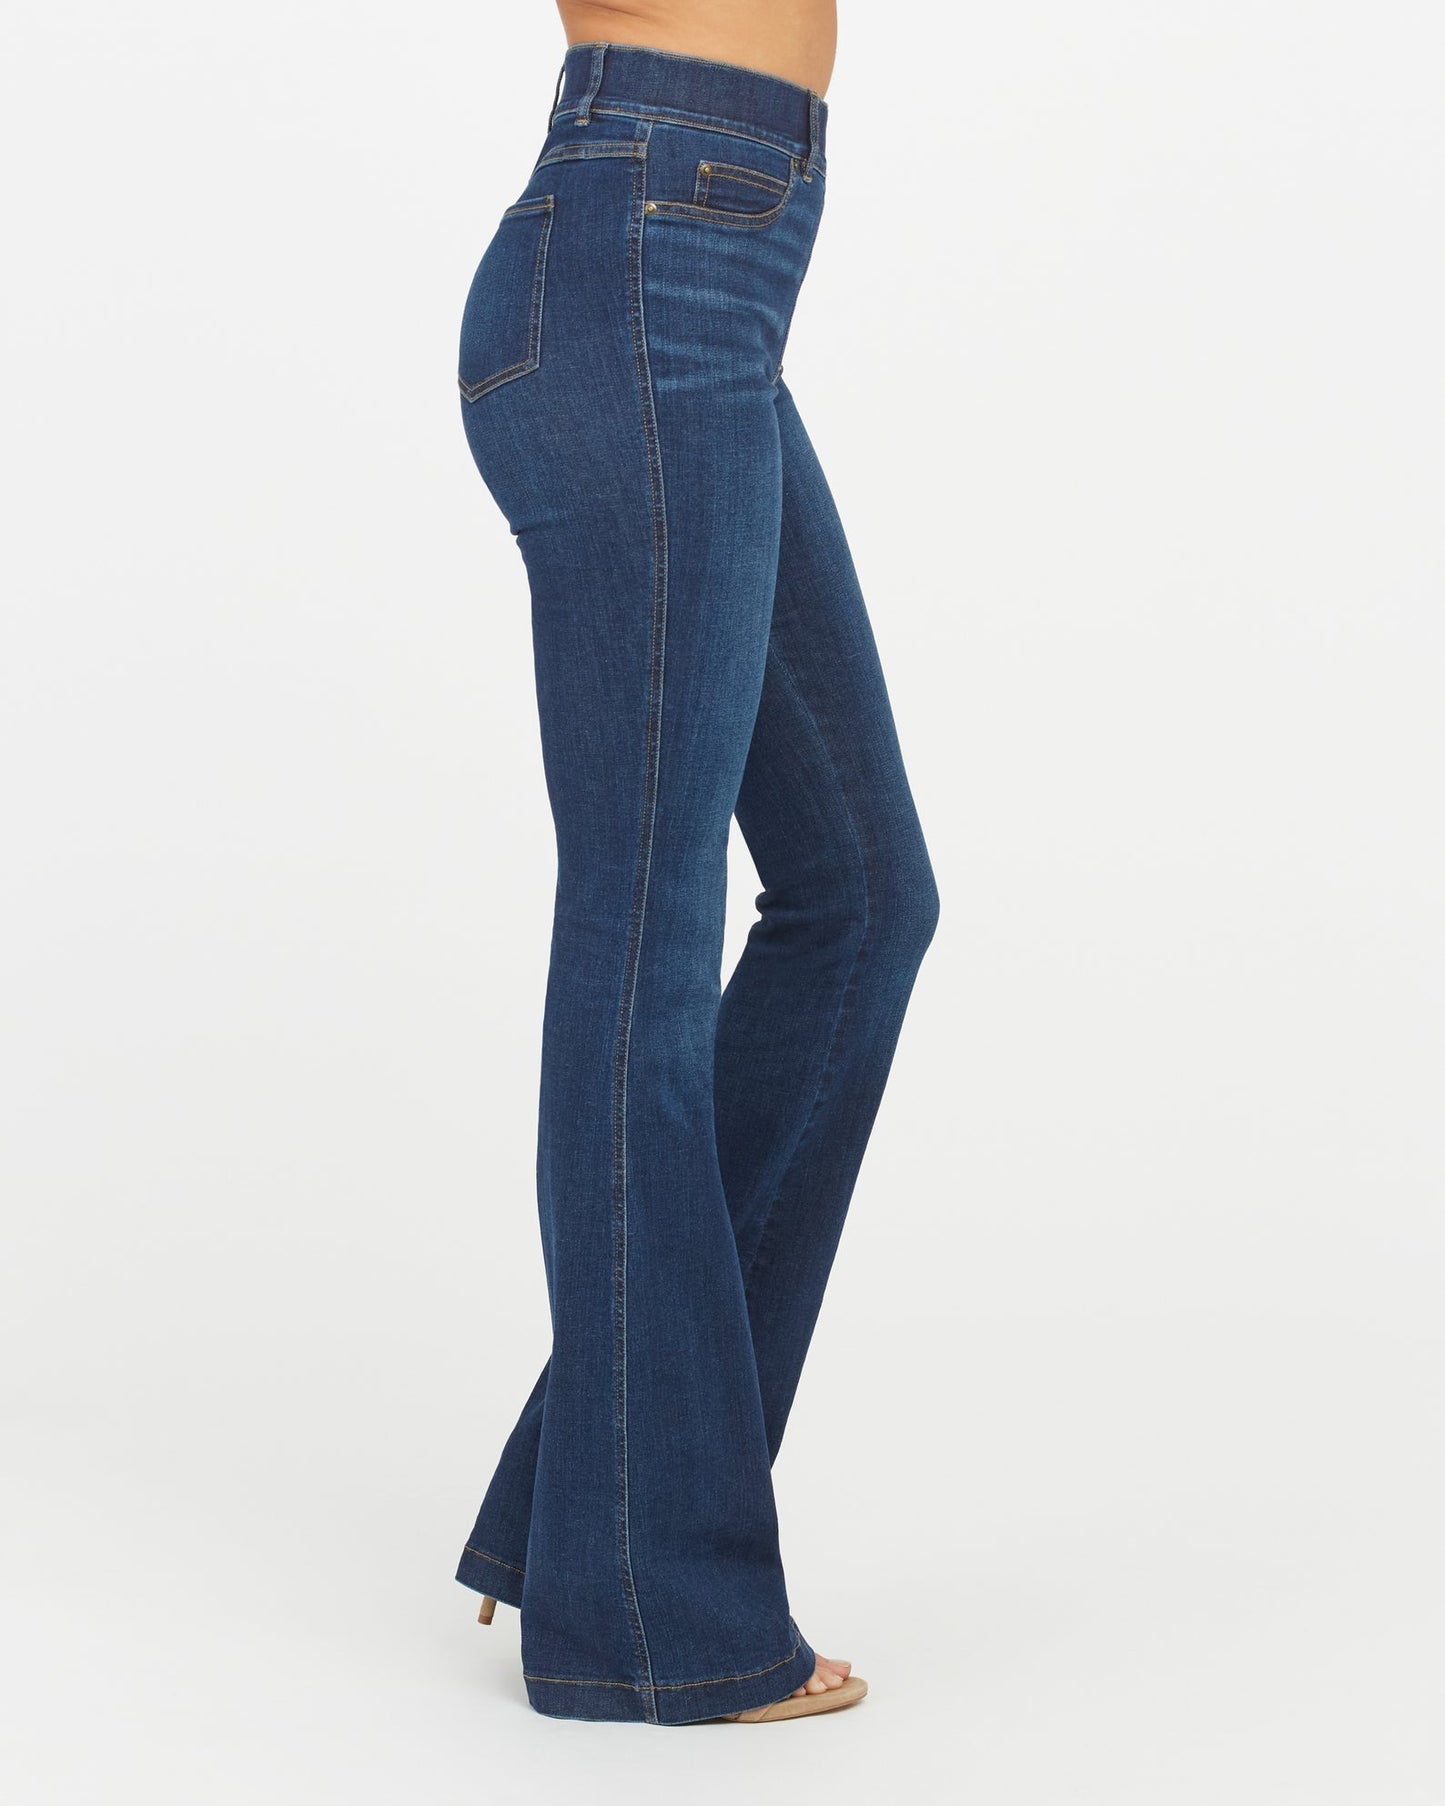 💕Hot Sale 50% OFF🔥Women's Flare Skinny Jeans